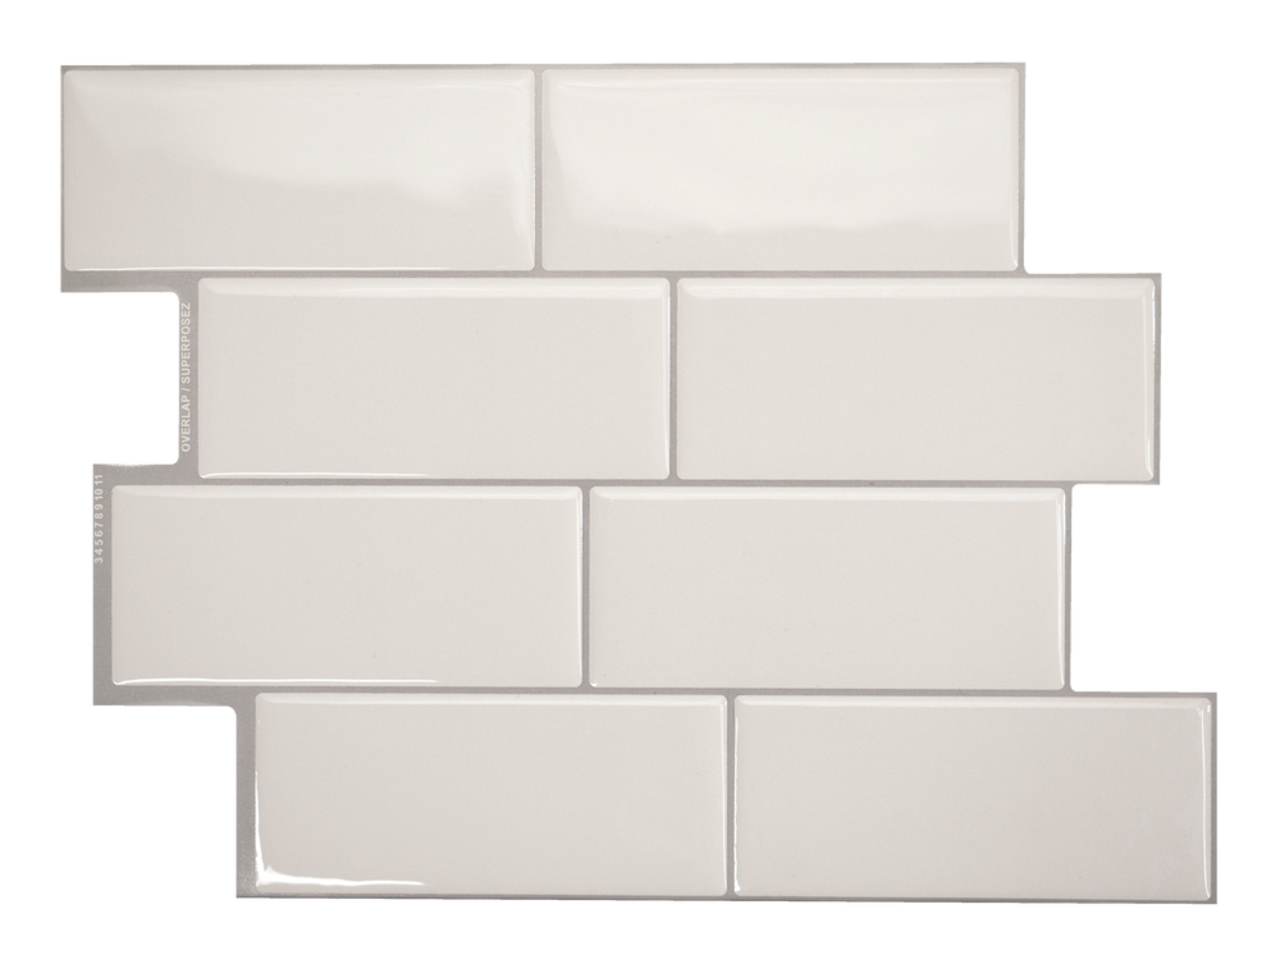 SMART TILES Peel and Stick Backsplash - 4 Sheets of 11.56 x 8.38 - 3D  Adhesive Peel and Stick Tile Backsplash for Kitchen, Bathroom, Wall Tile 